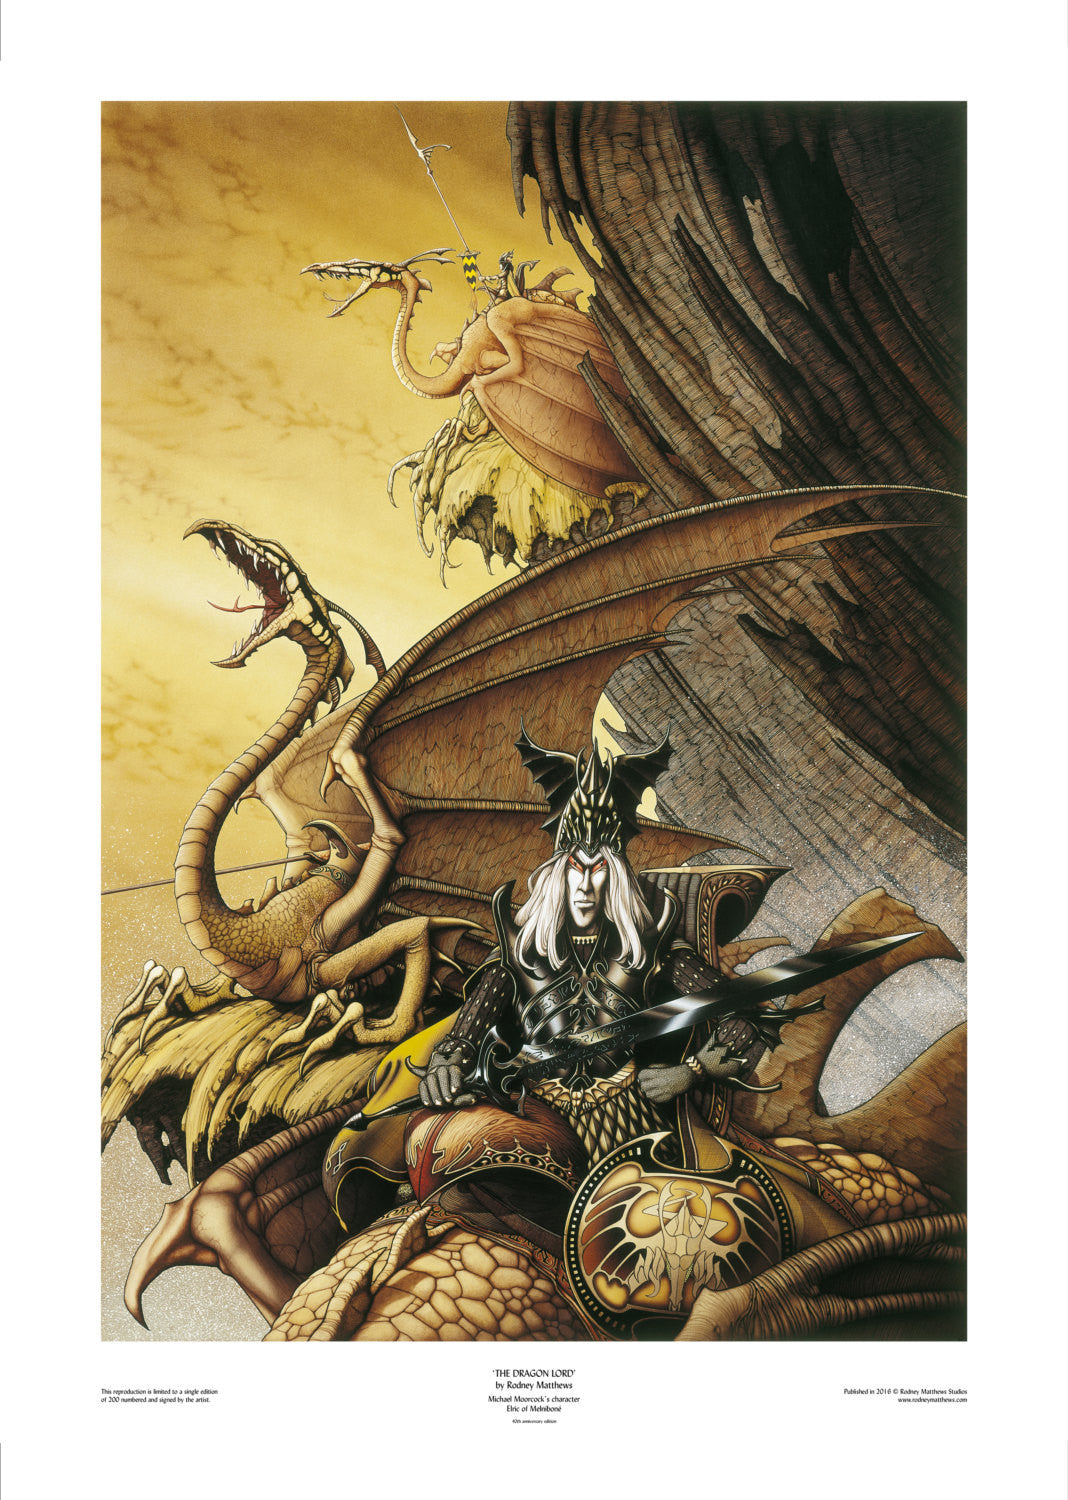 Elric of Melniboné: The Dragon Lord limited edition giclèe art print